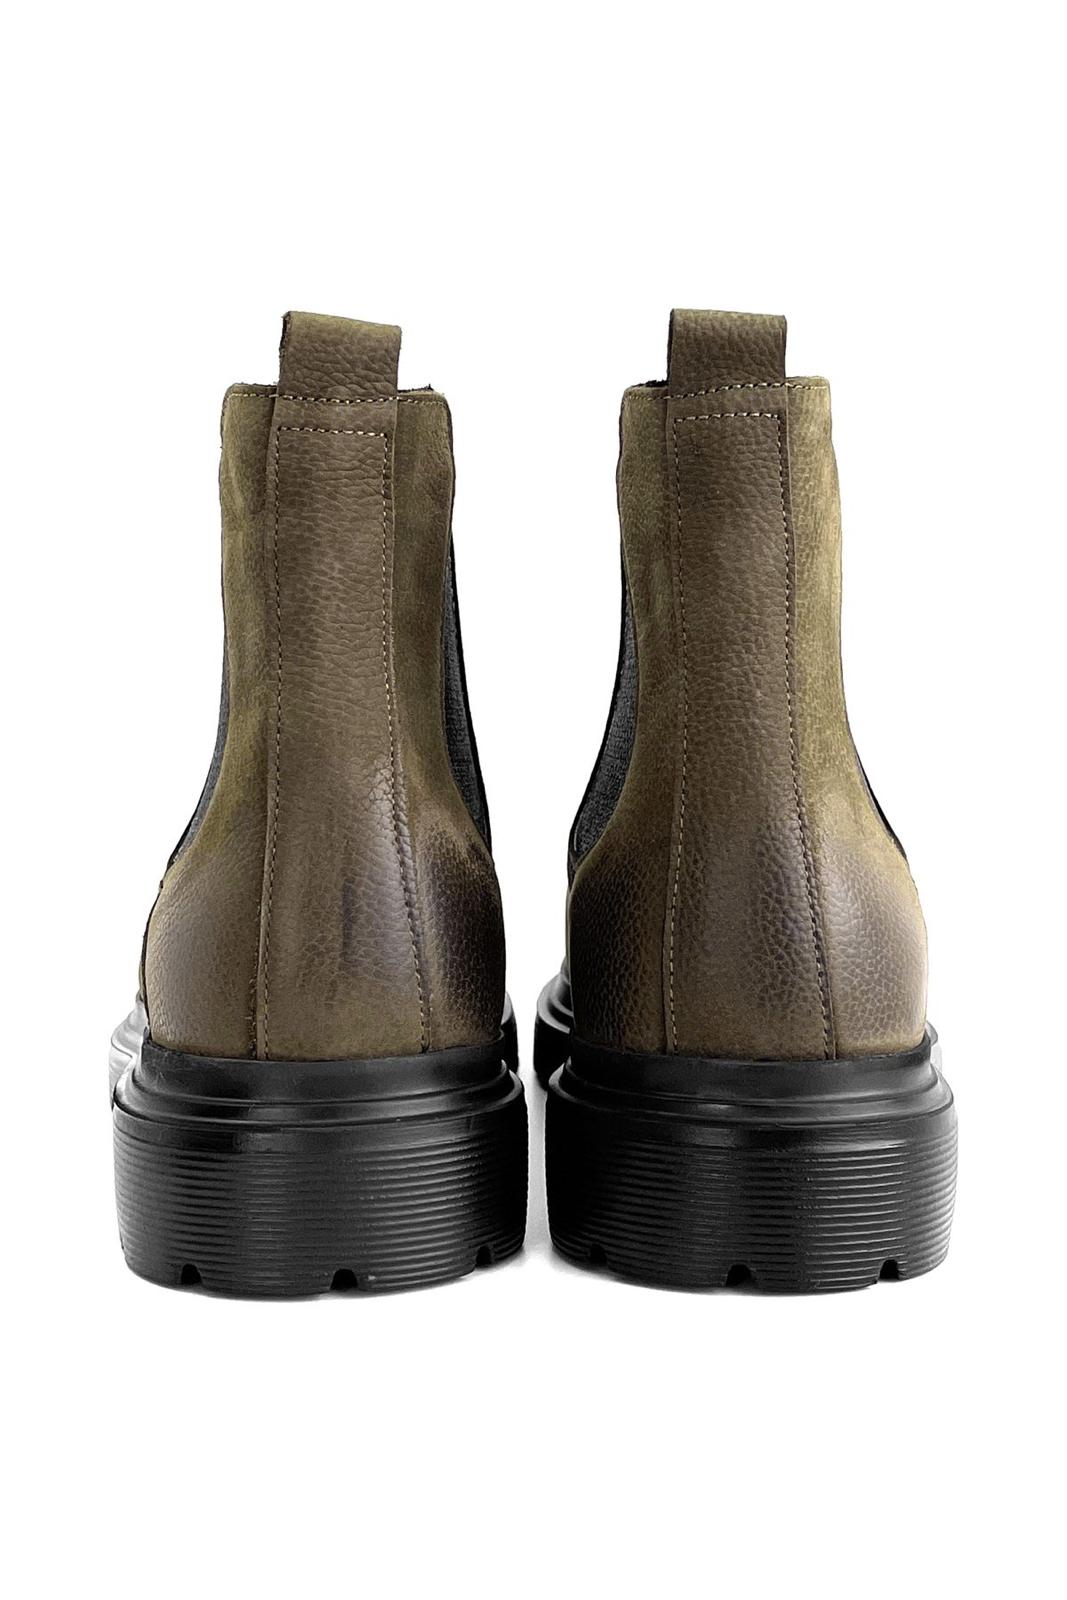 Lucas Khaki Nubuck Leather Boots